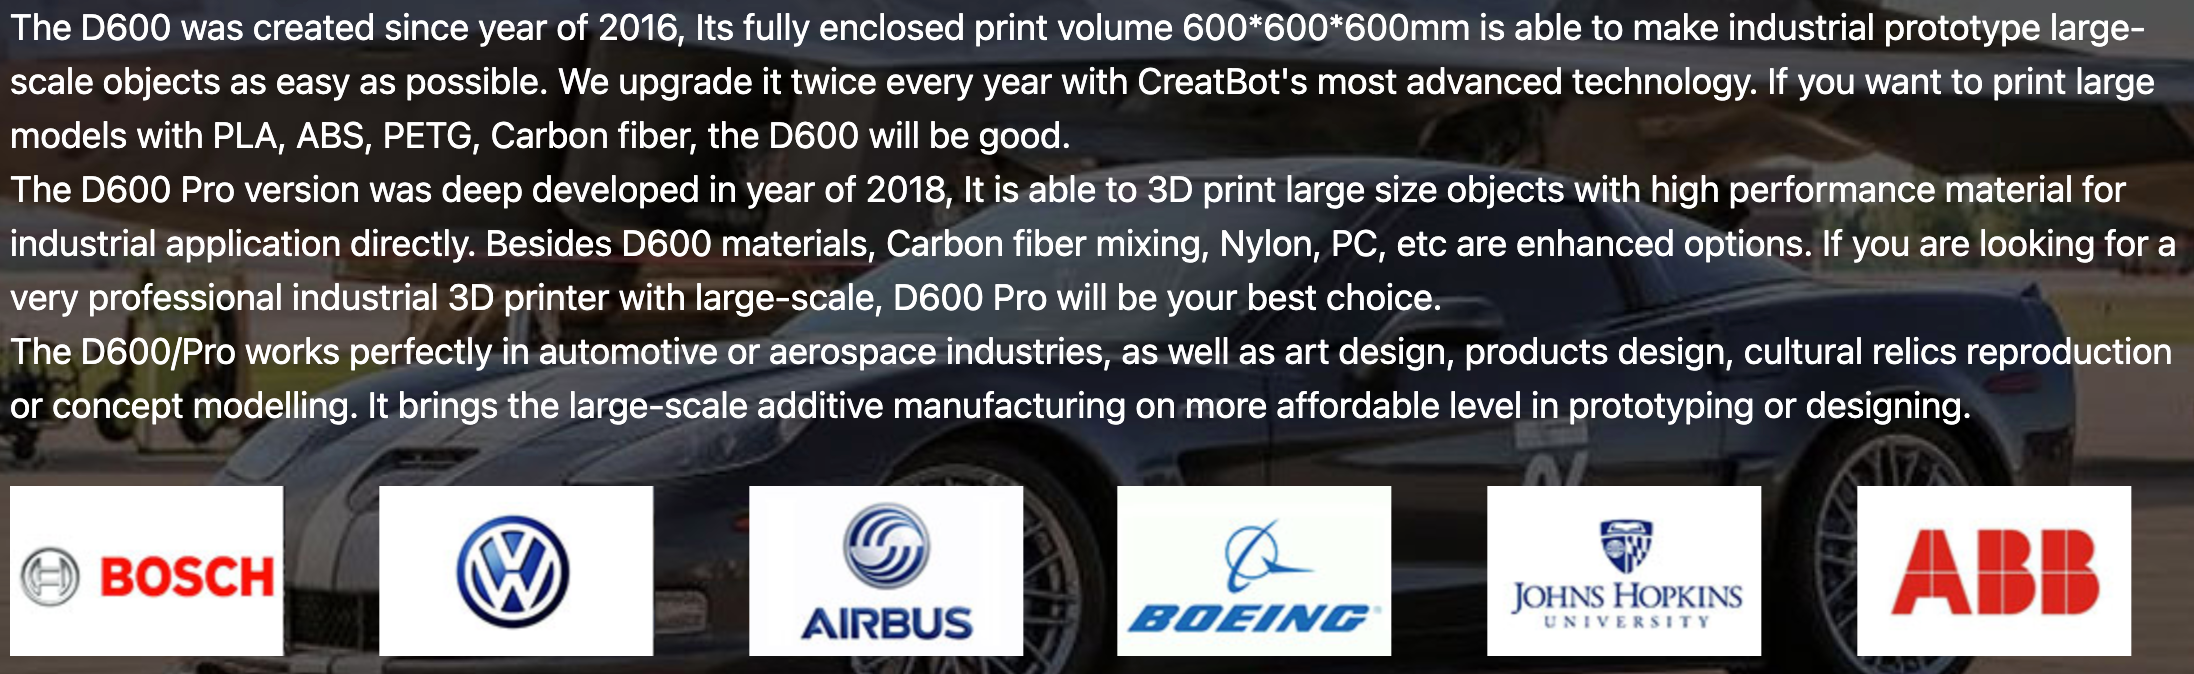 CreatBot-D600-Pro-3D-Printer-Description-1